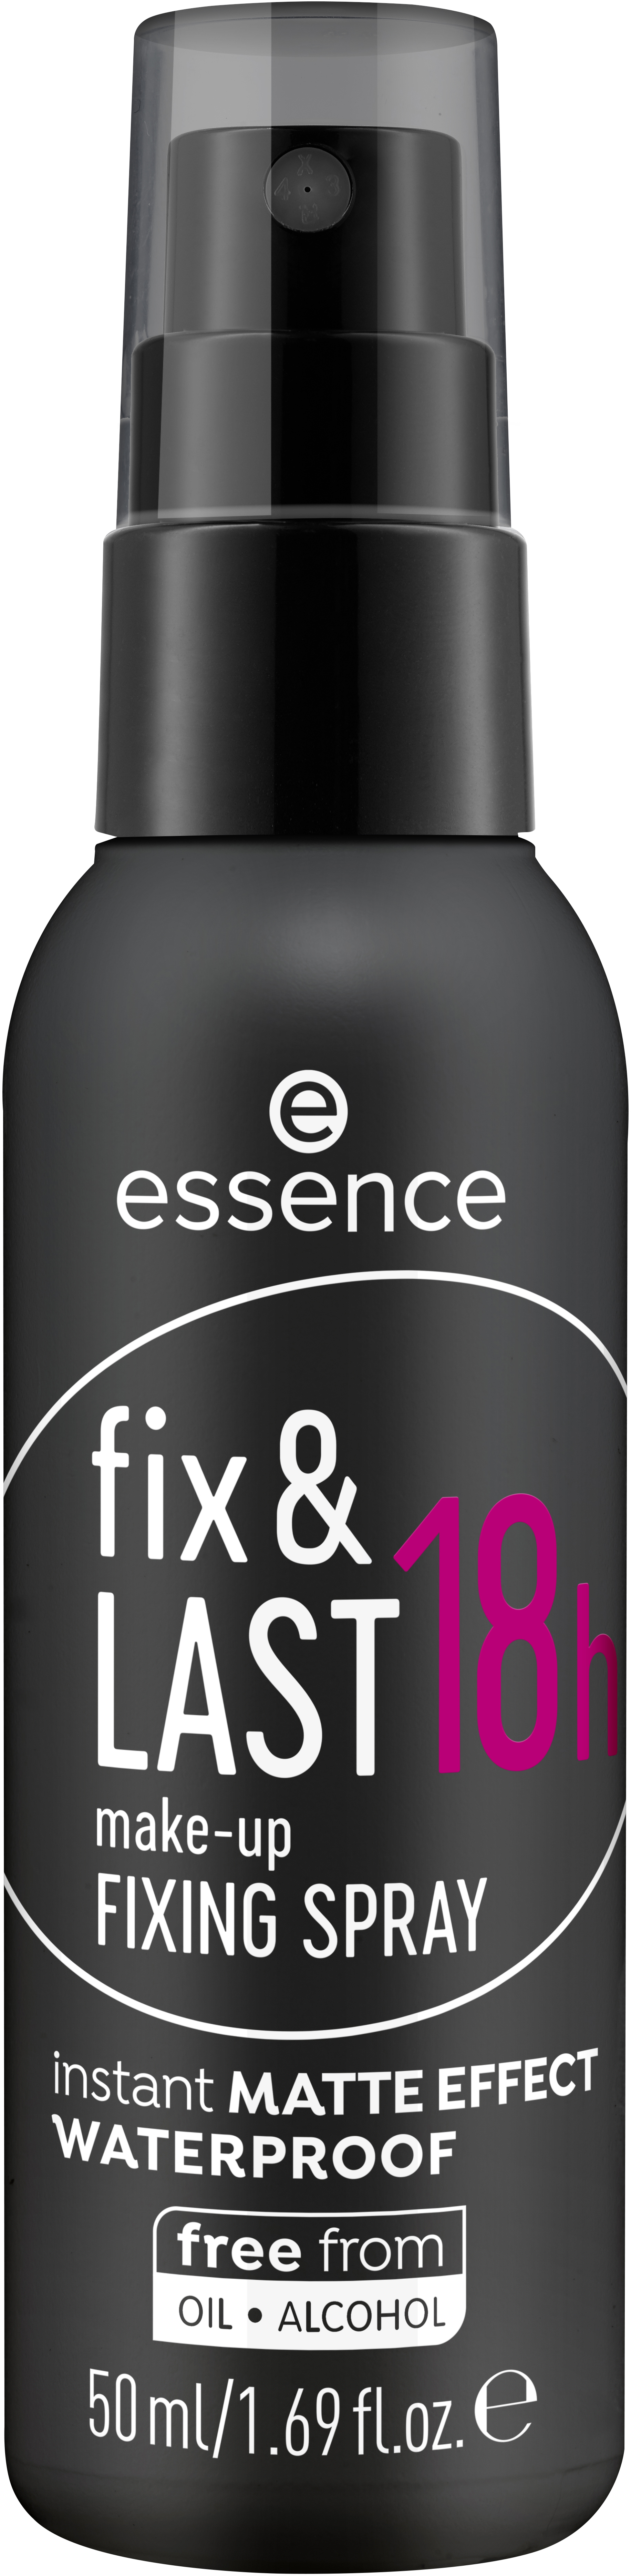 essence fix & last 18h make-up fixing spray 50 ml 